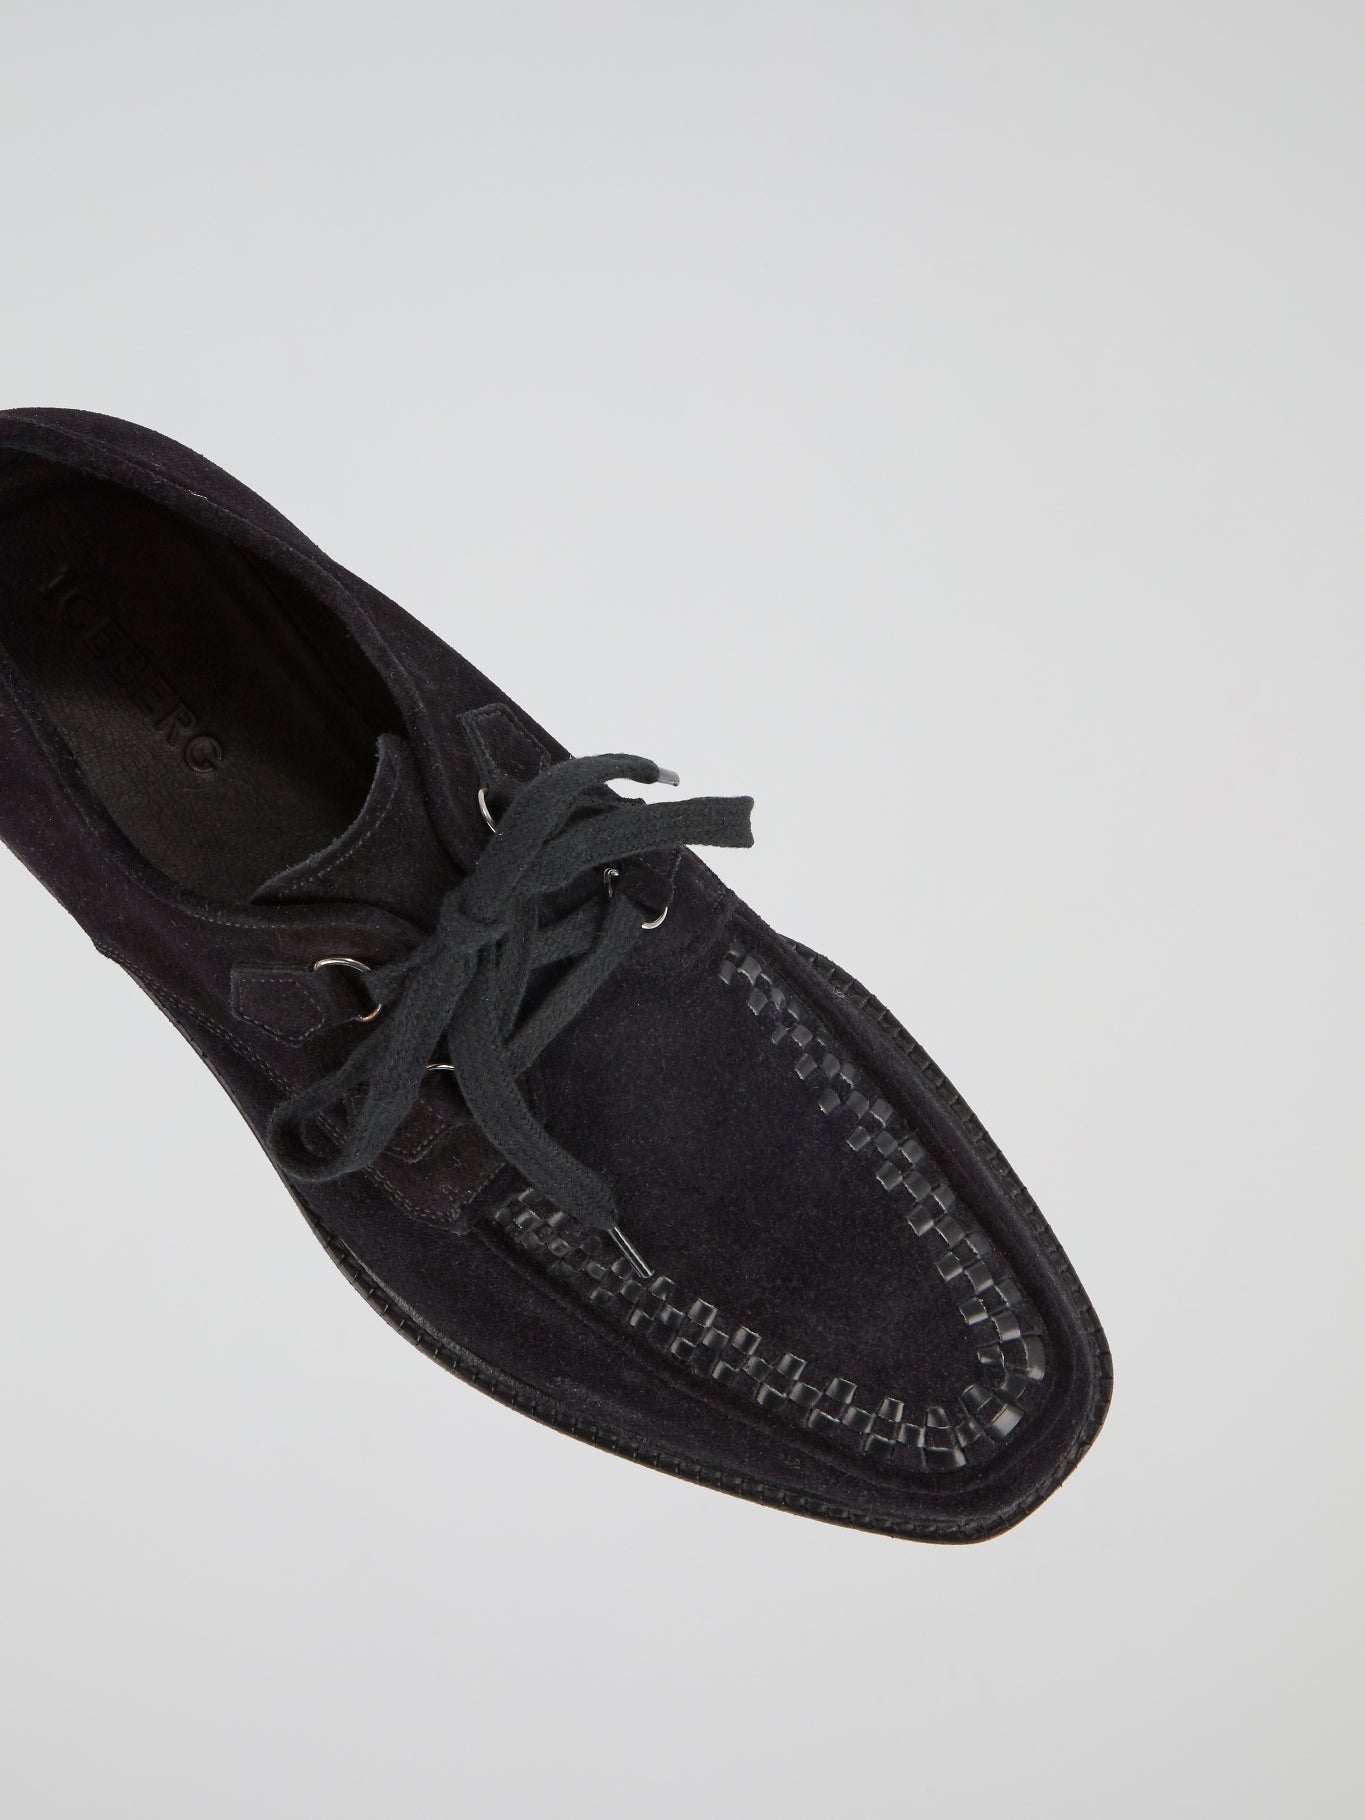 Black Platform Suede Shoes